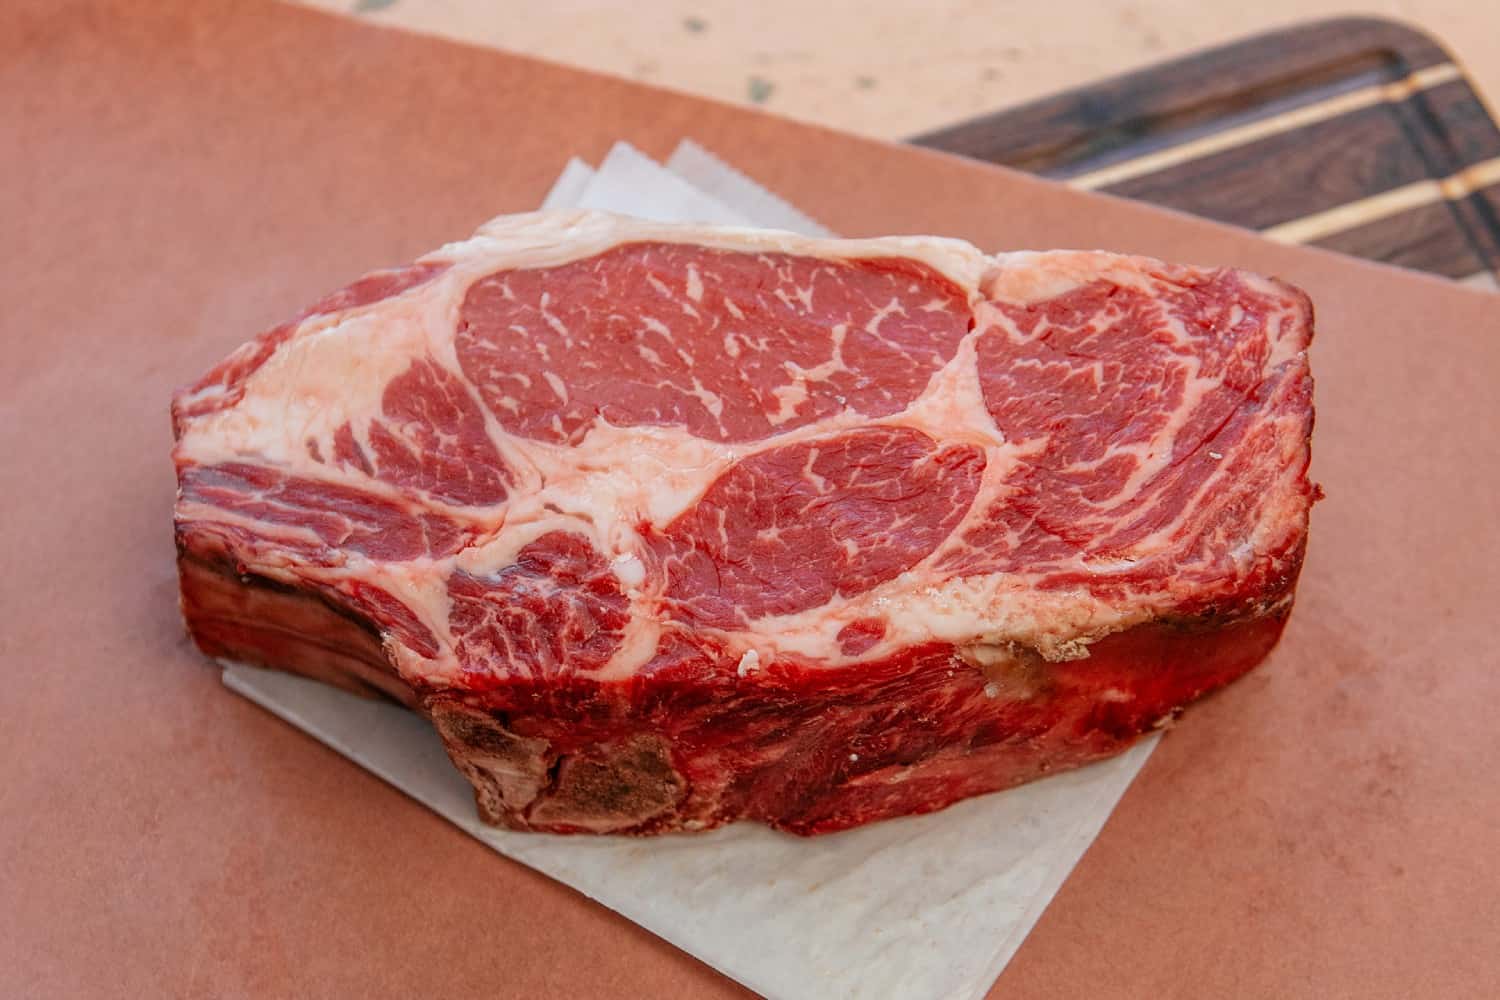 Cut steak - ready to cook